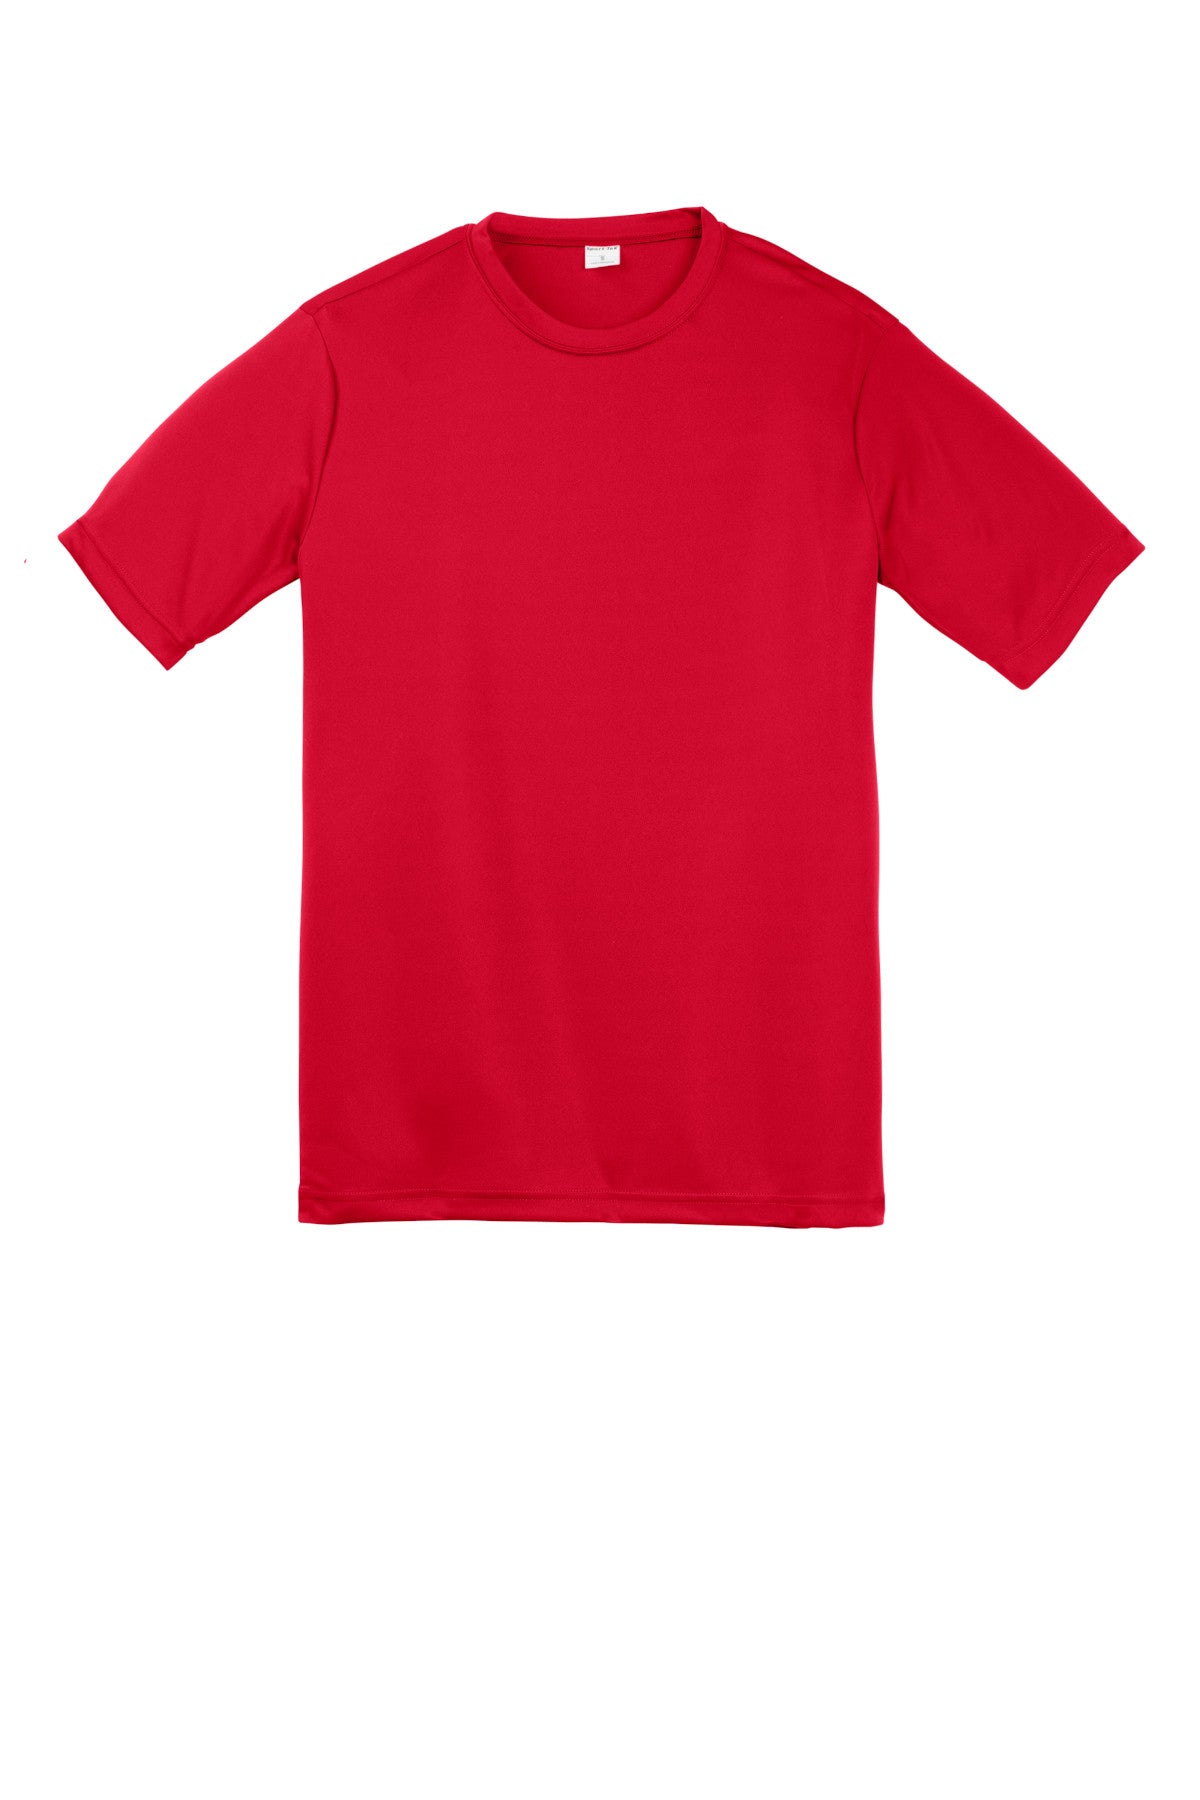 Sport-Tek Yst350 Polyester Youth T-Shirt Yth Small / True Red